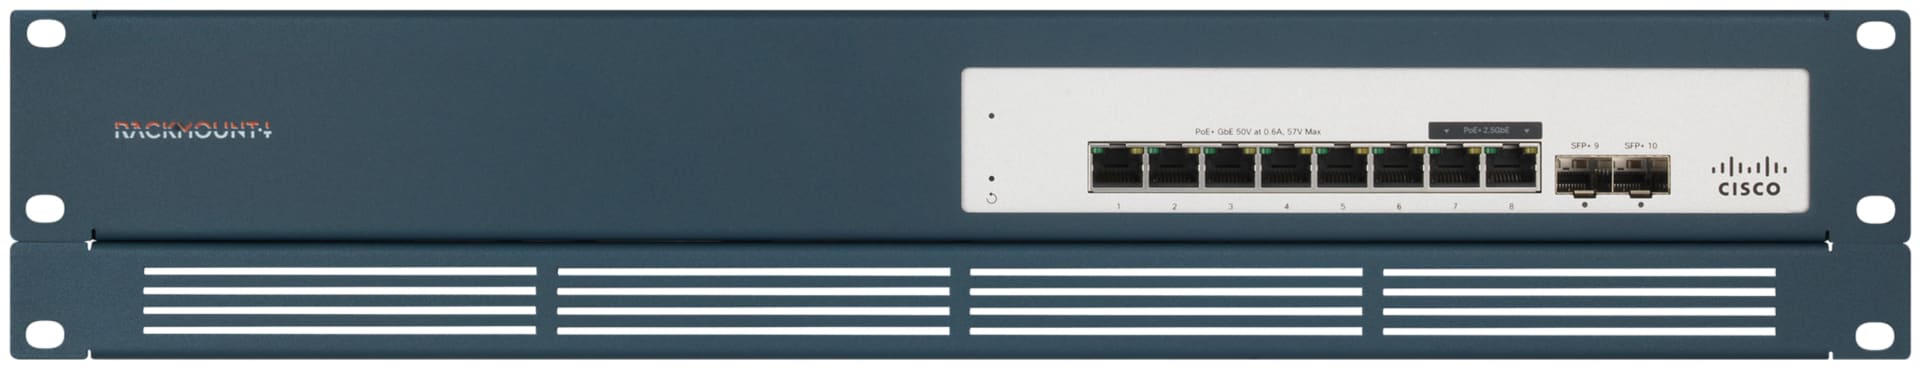 Rackmount.IT Rack Mount Kit for Meraki MS130-8X/MS130-12X Cloud Managed Network Switch